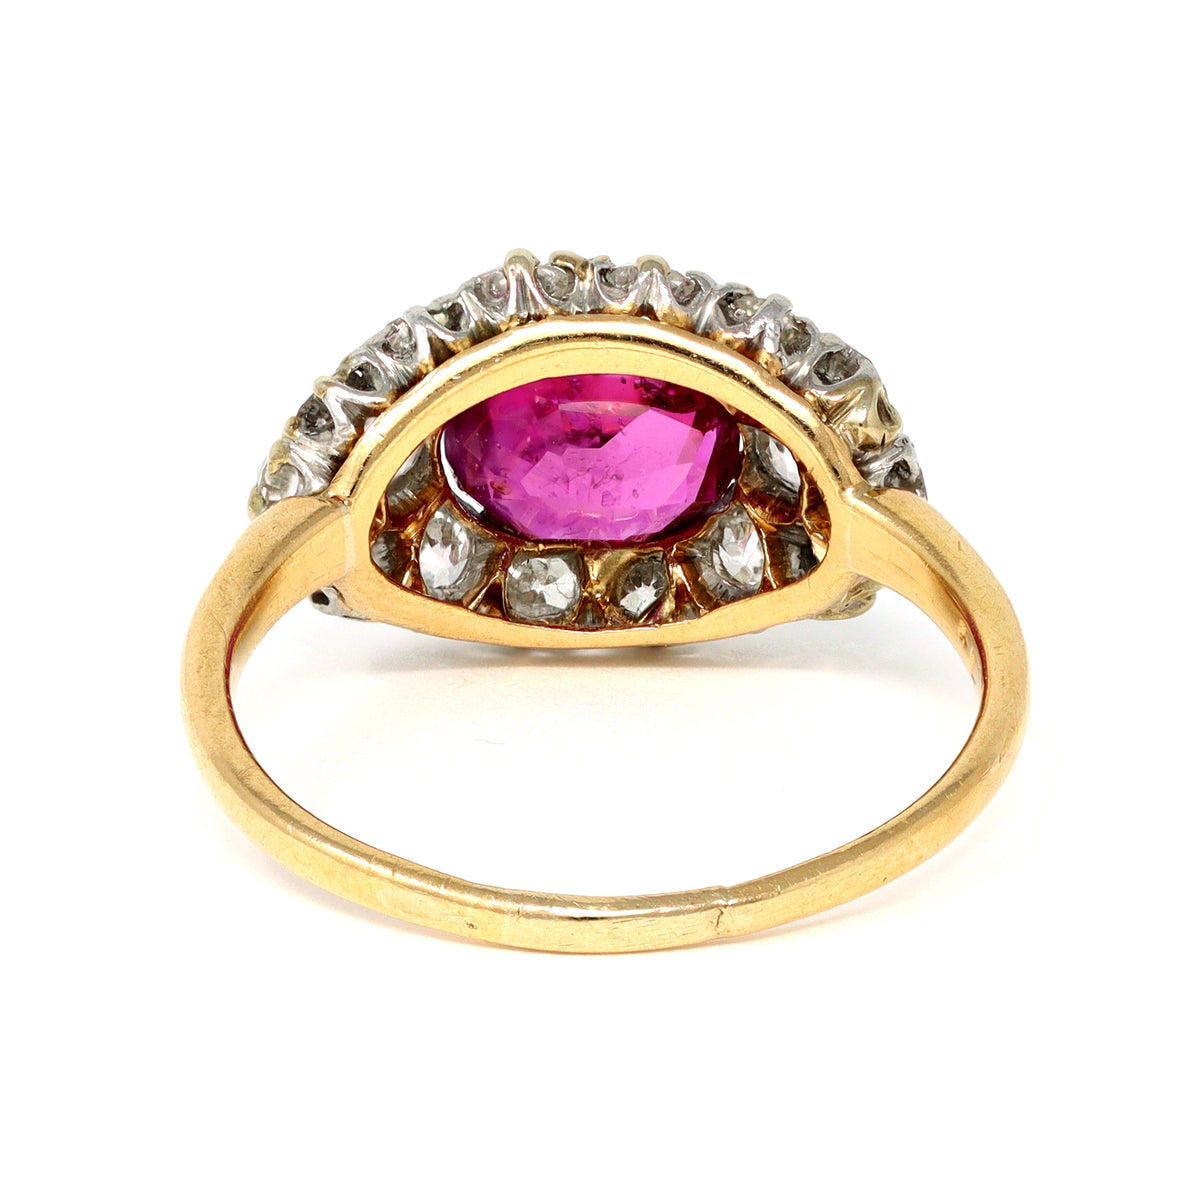 Victorian GIA Certified No Heat Burma Ruby Ring with Diamonds set in 18 karat yellow gold back view 